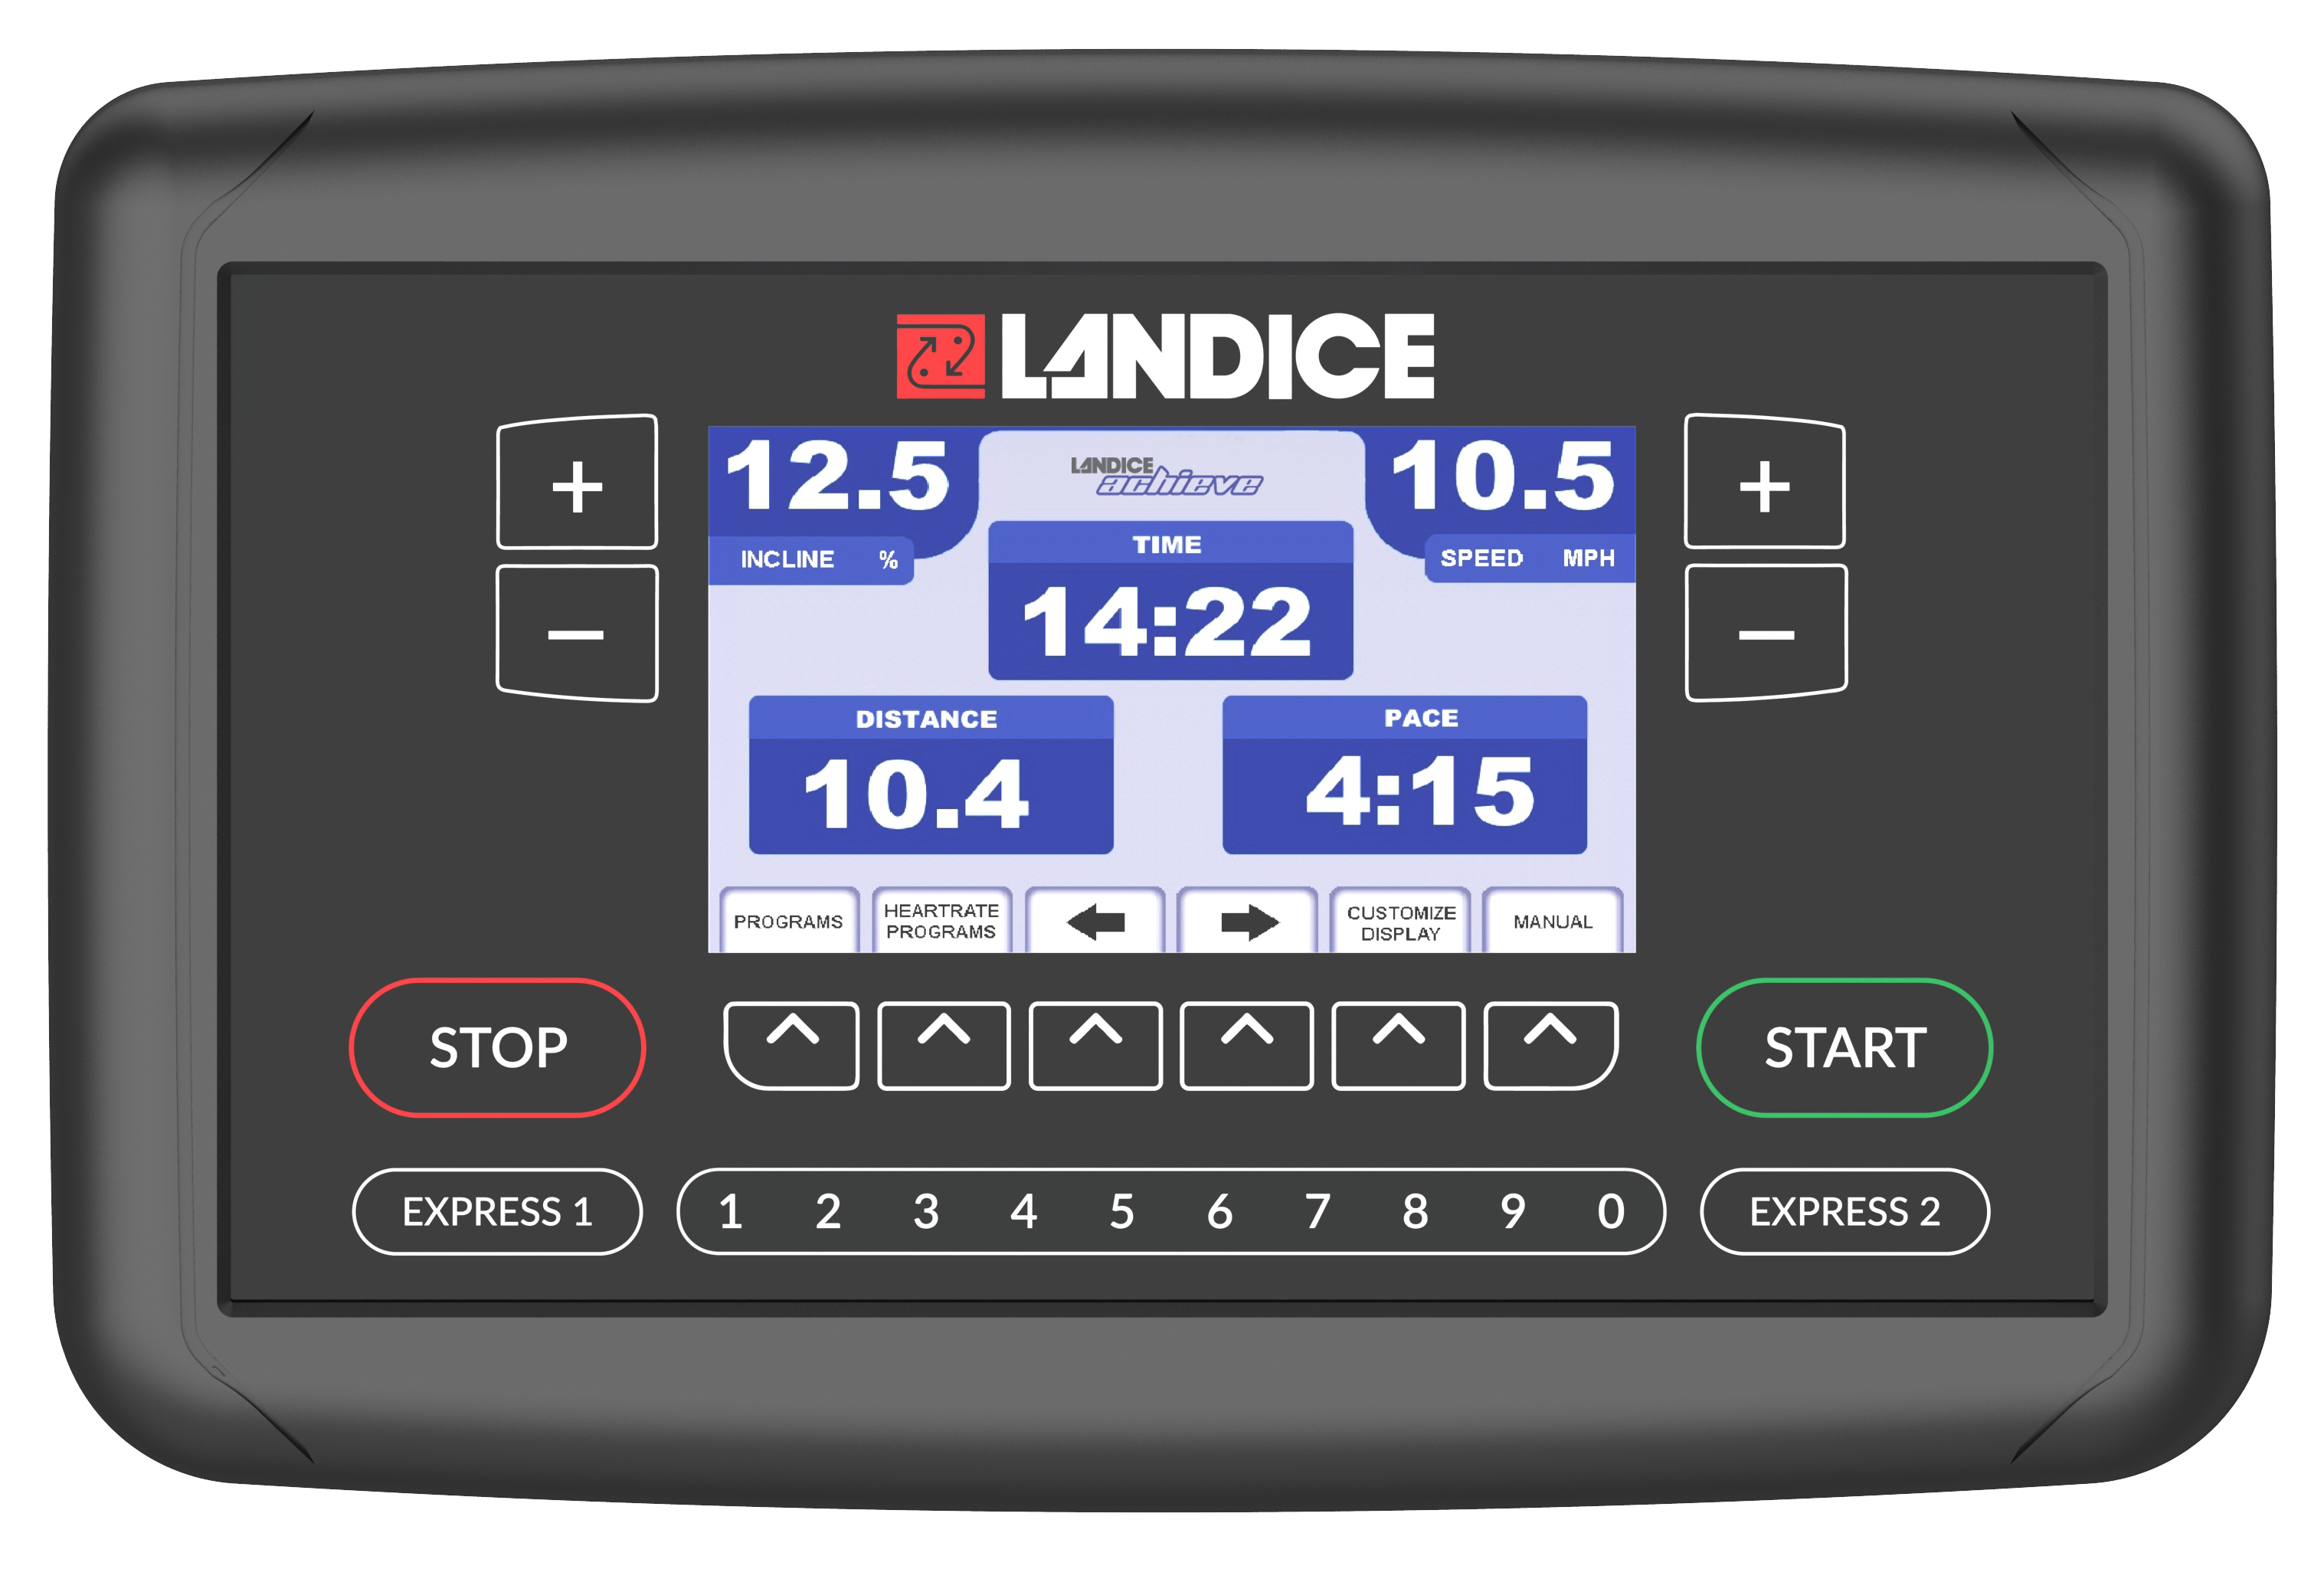 A landice treadmill displays a time of 14:22